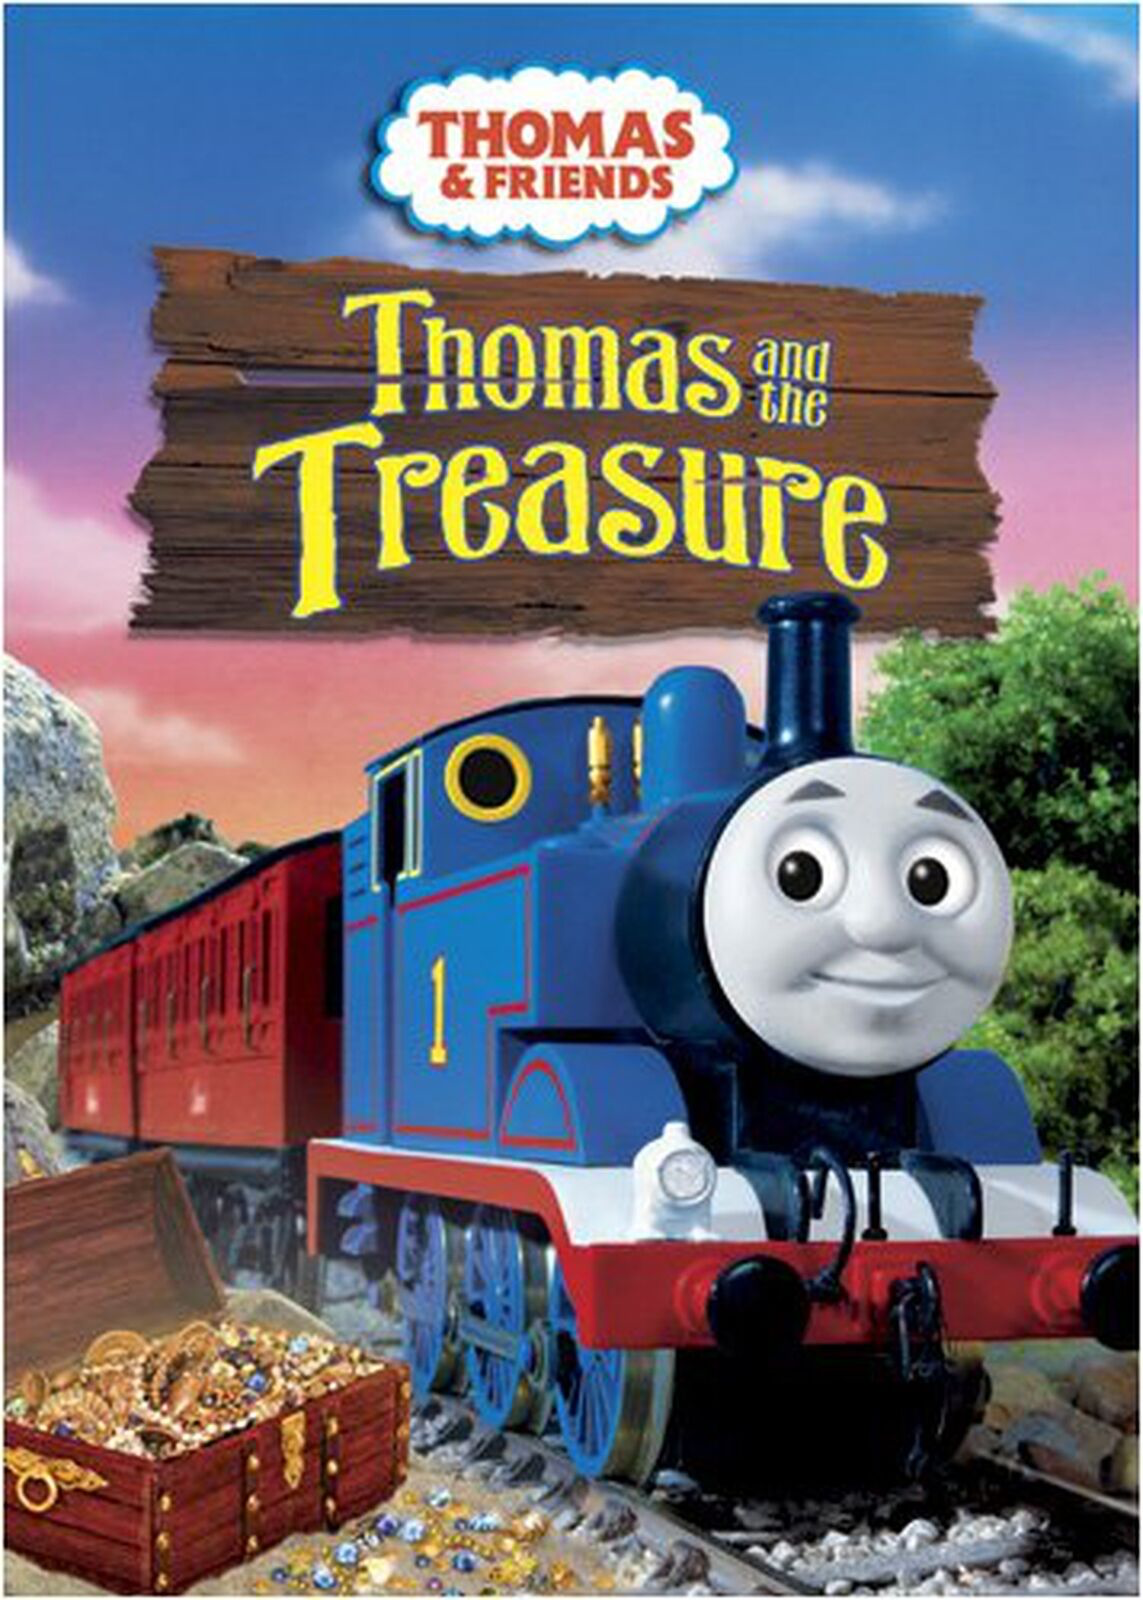 Thomas [The Tank Engine] & Friends: Thomas & The Treasure - DVD